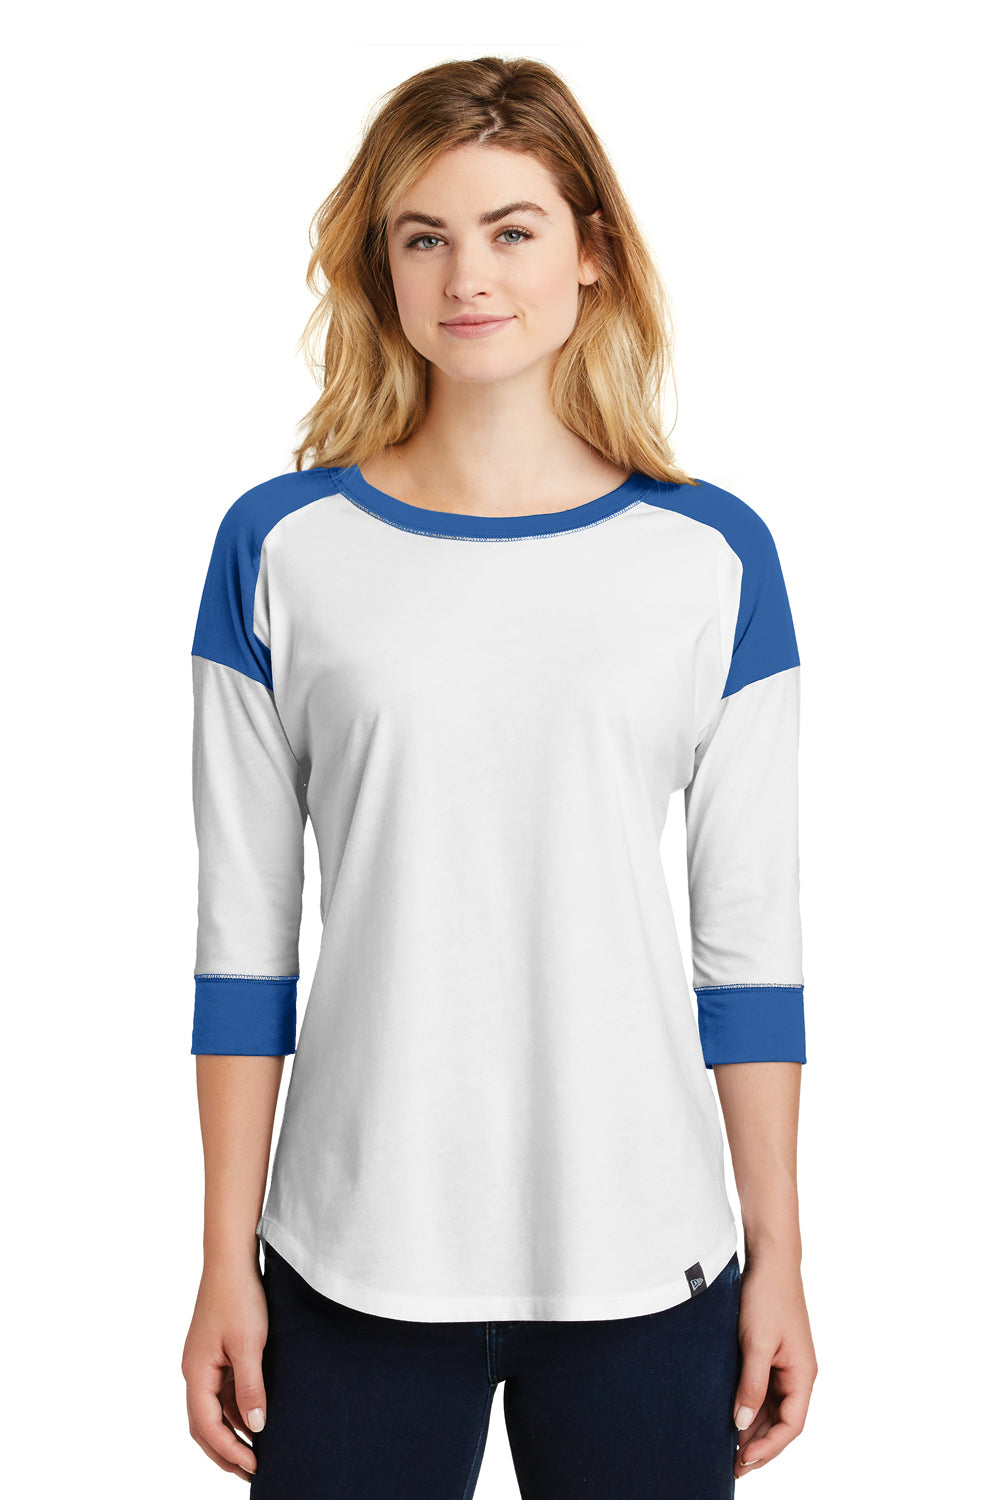 New Era LNEA104 Womens Heritage 3/4 Sleeve Crewneck T-Shirt Royal Blue/White Front